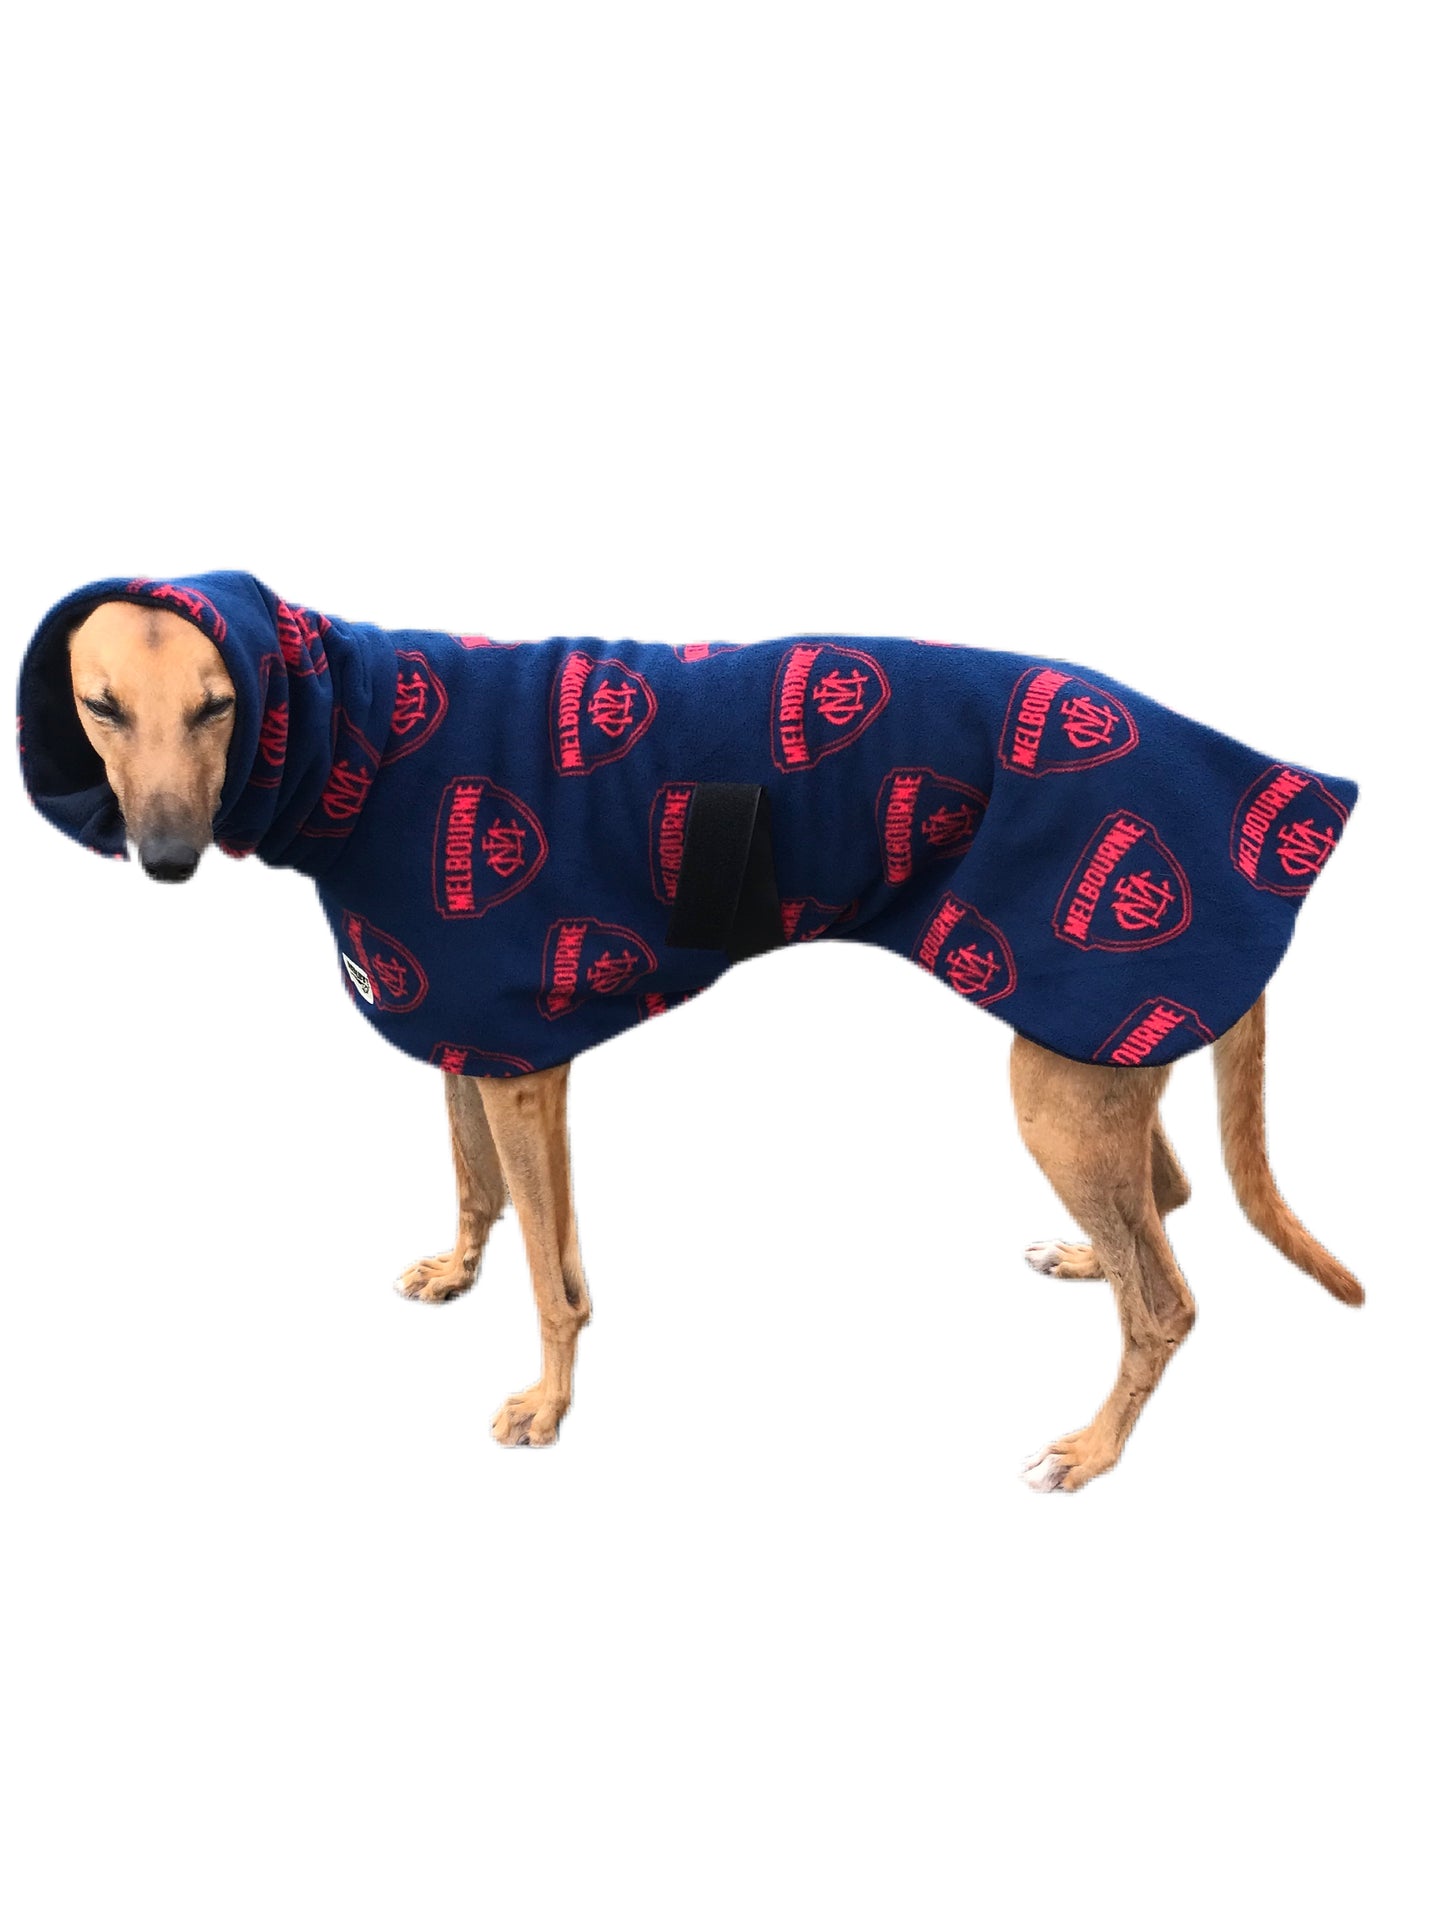 AFL Melbourne inspired greyhound coat deluxe style double polar fleece washable